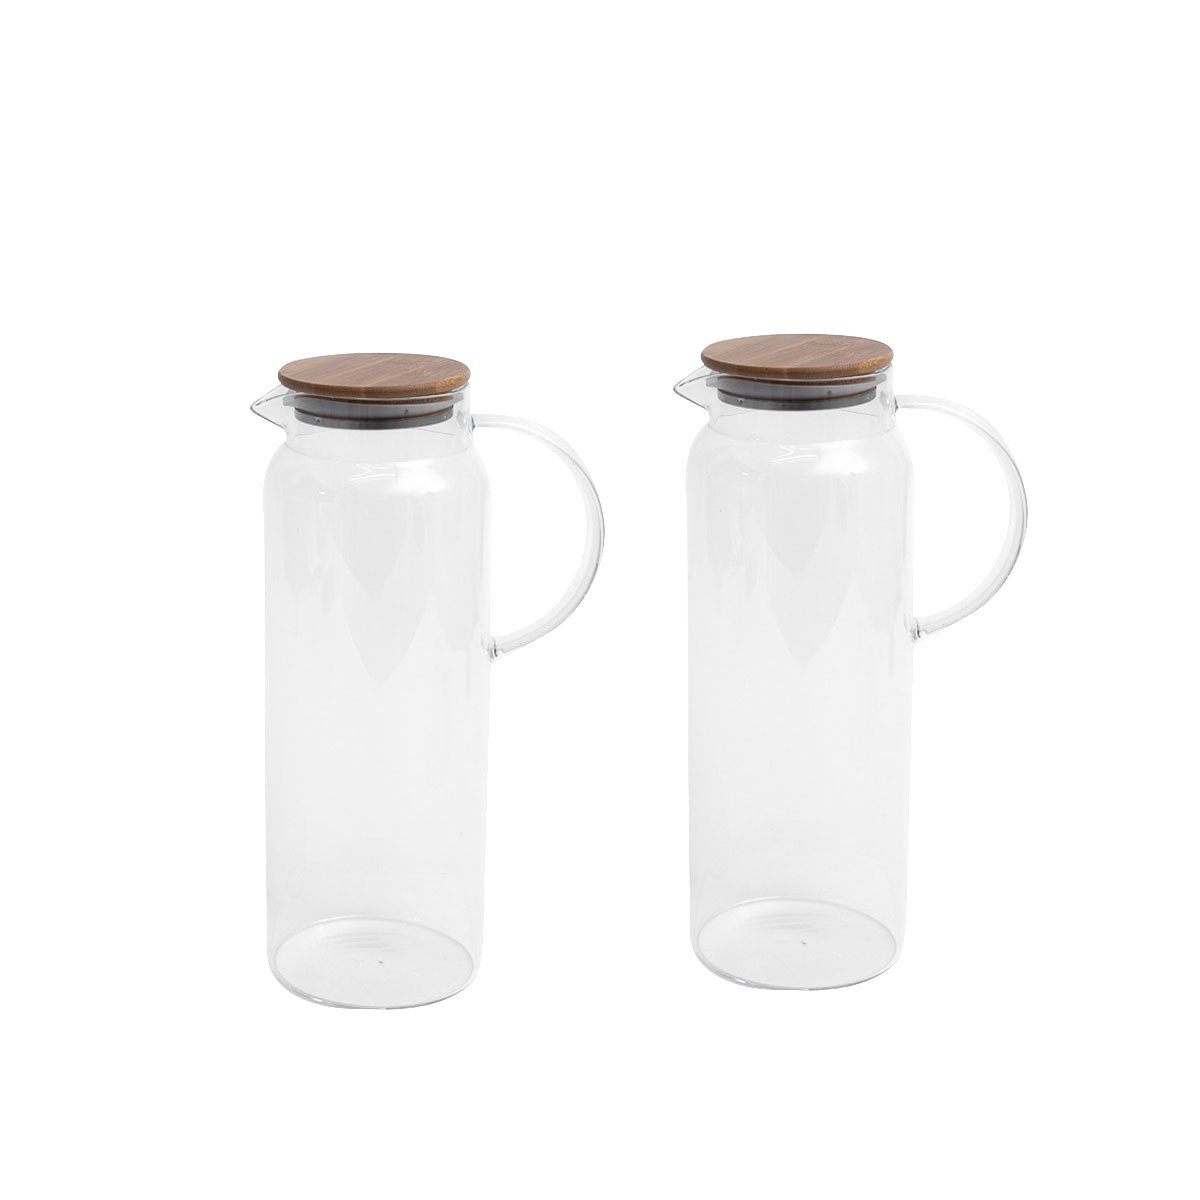 Kit 2 jarras de vidro borossilicato suco com tampa de bambu 2L - Oikos - 1